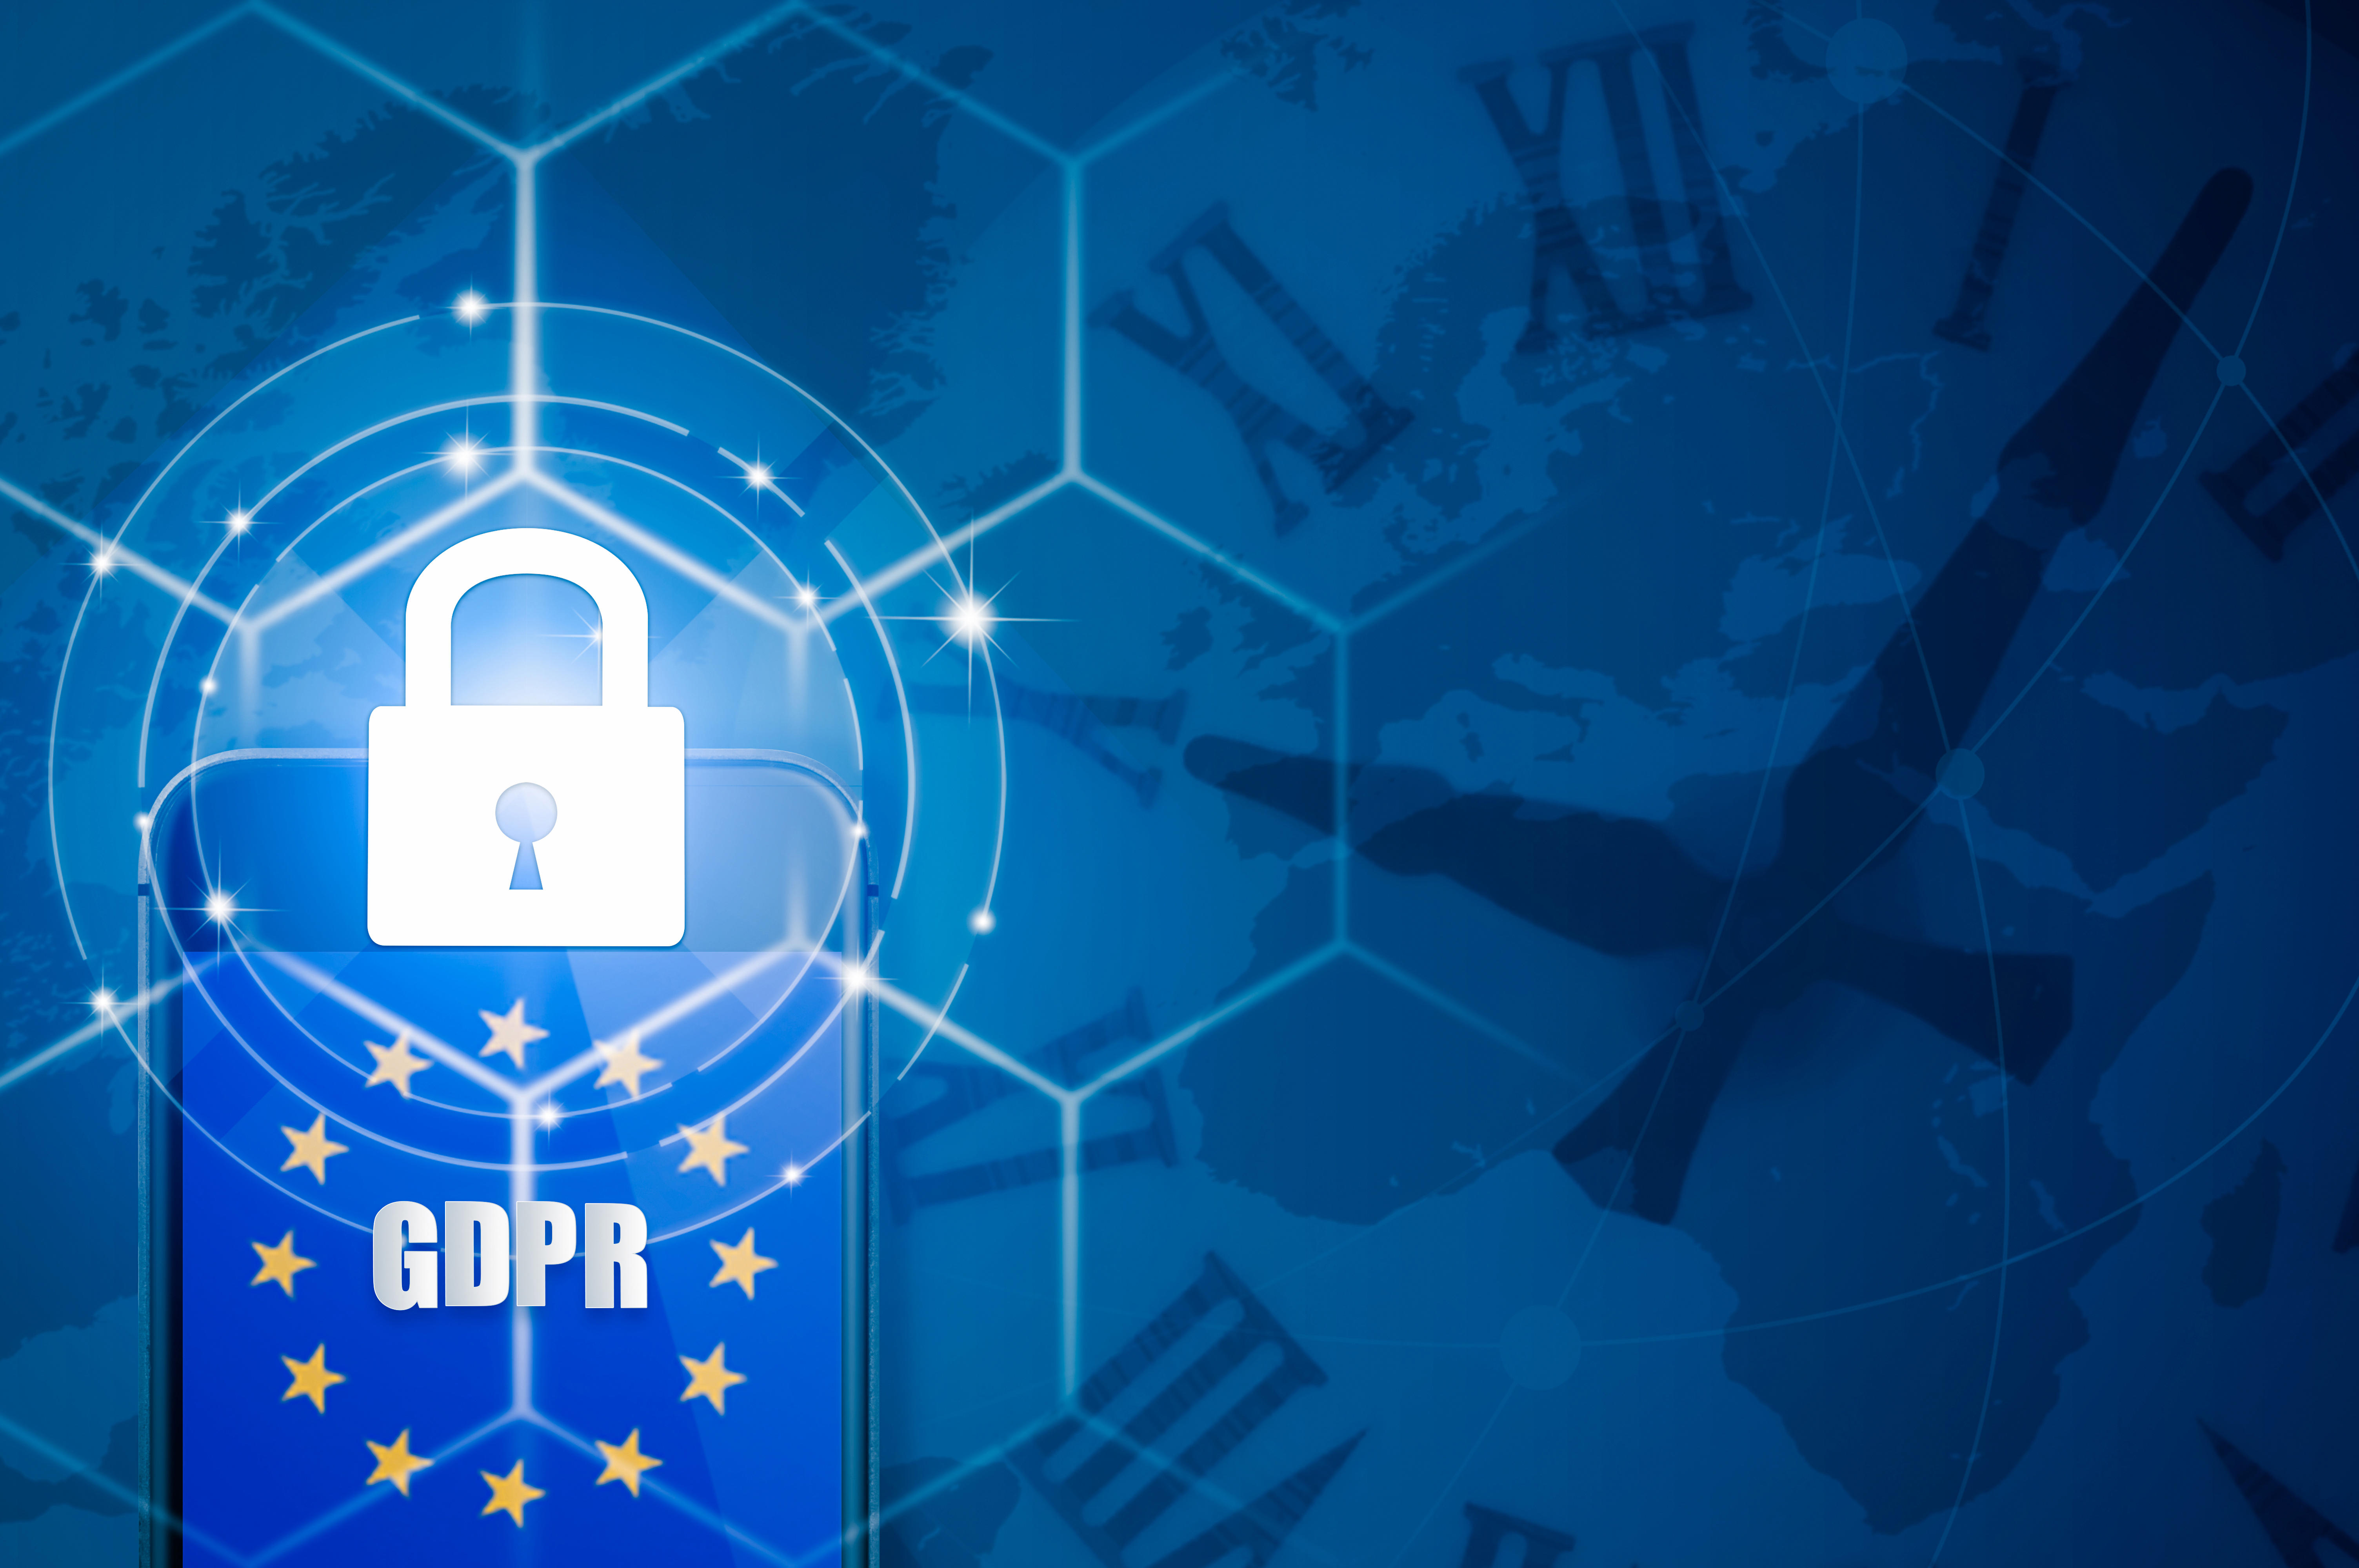 Padlock over smartphone and EU flag inside mobile phone and EU map, symbolizing the EU General Data Protection Regulation or GDPR. Designed to harmonize data privacy laws across Europe.